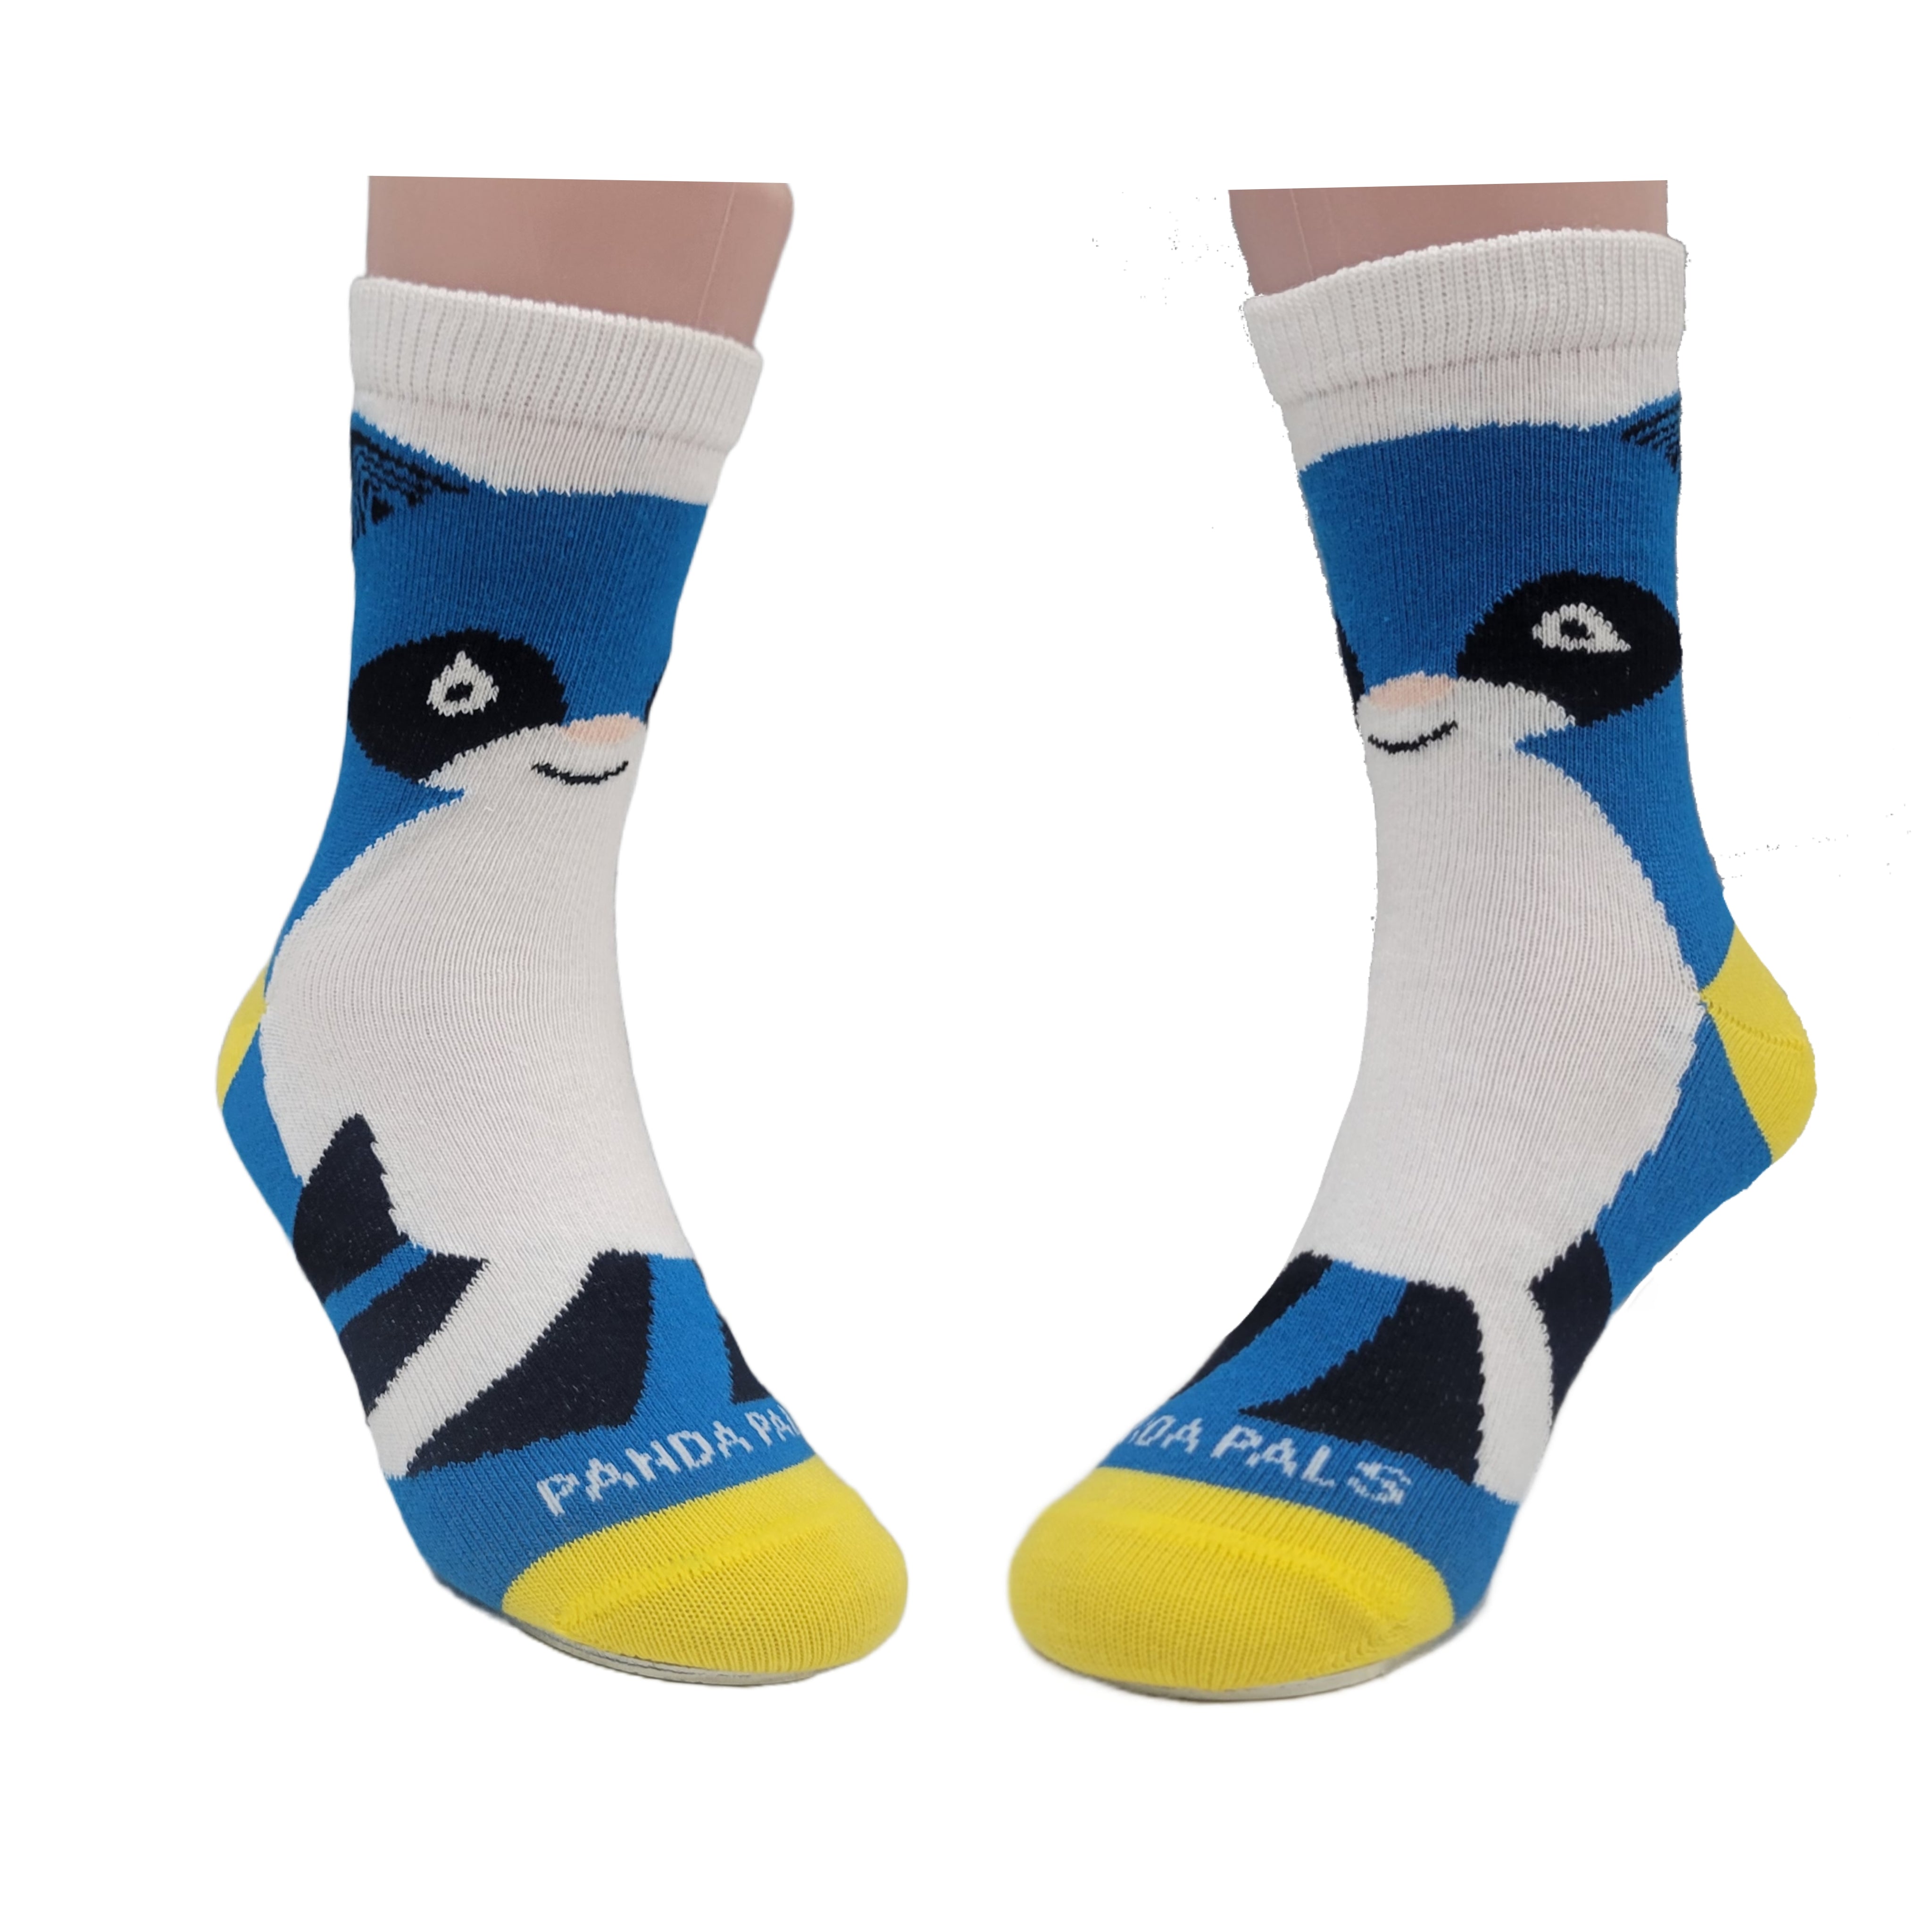 Blue Raccoon Socks from the Sock Panda (Ages 3-5)